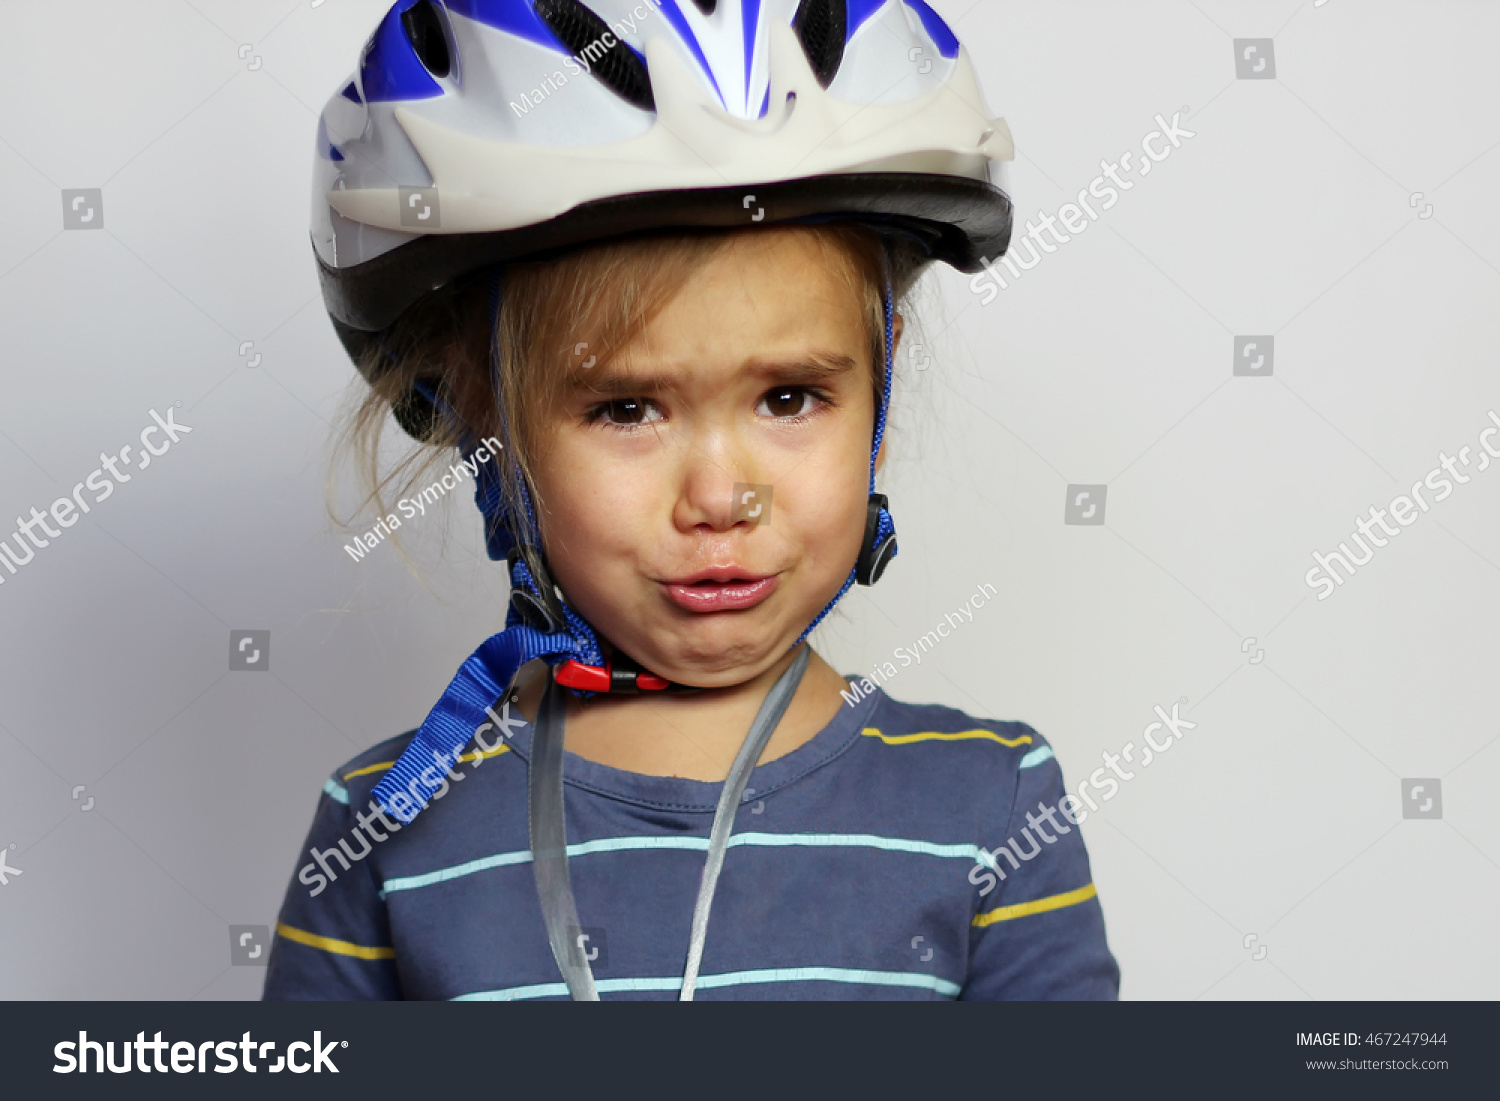 small cycle helmet